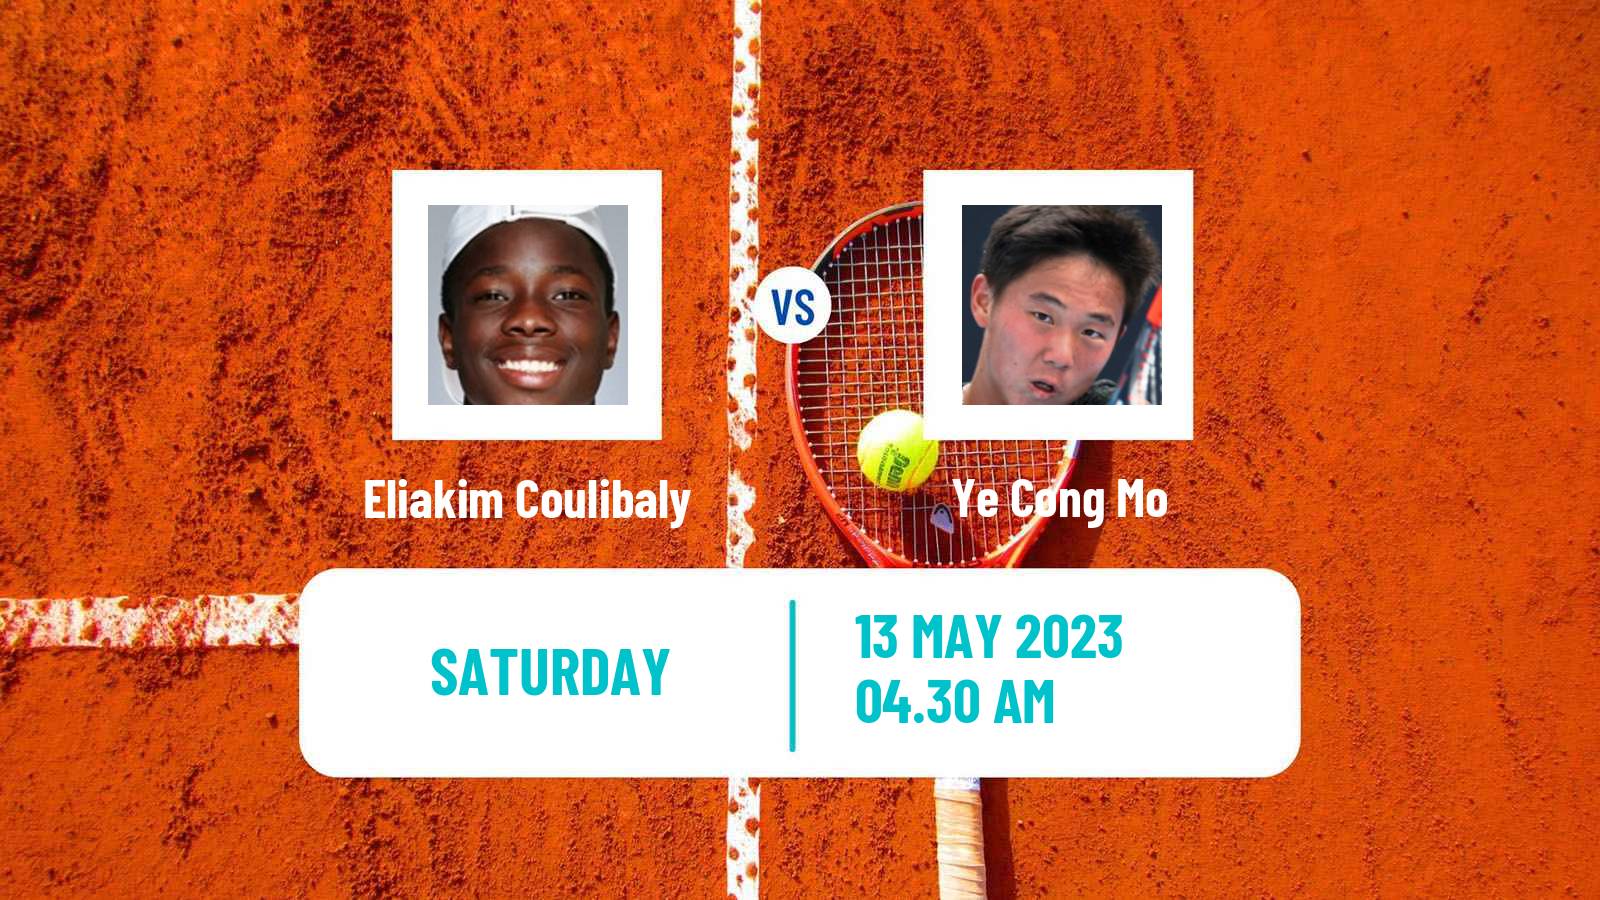 Tennis ITF Tournaments Eliakim Coulibaly - Ye Cong Mo